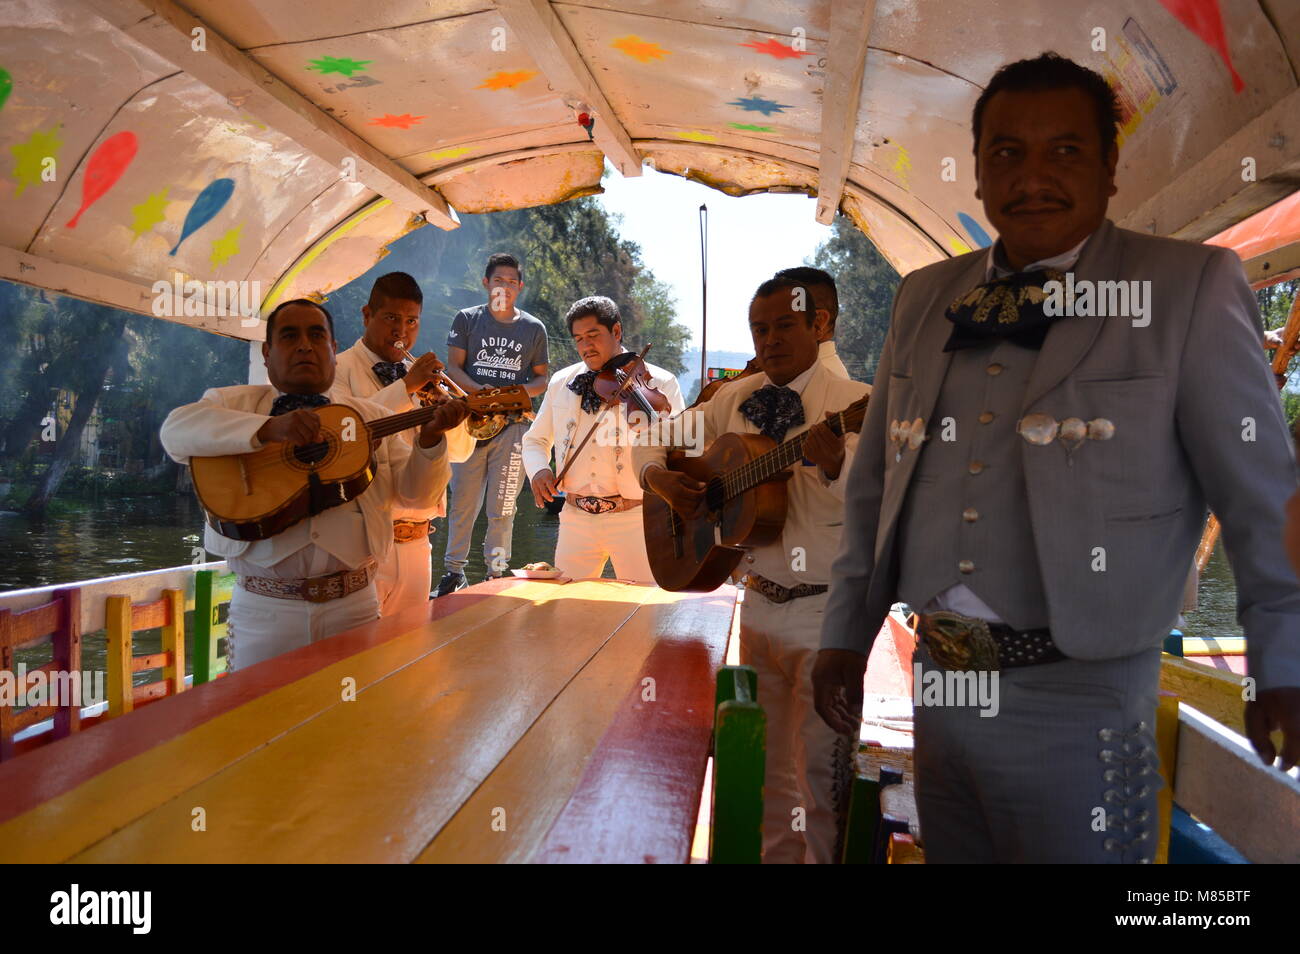 A mariachi band on a boat in Xochimilco, Mexico City Stock Photo